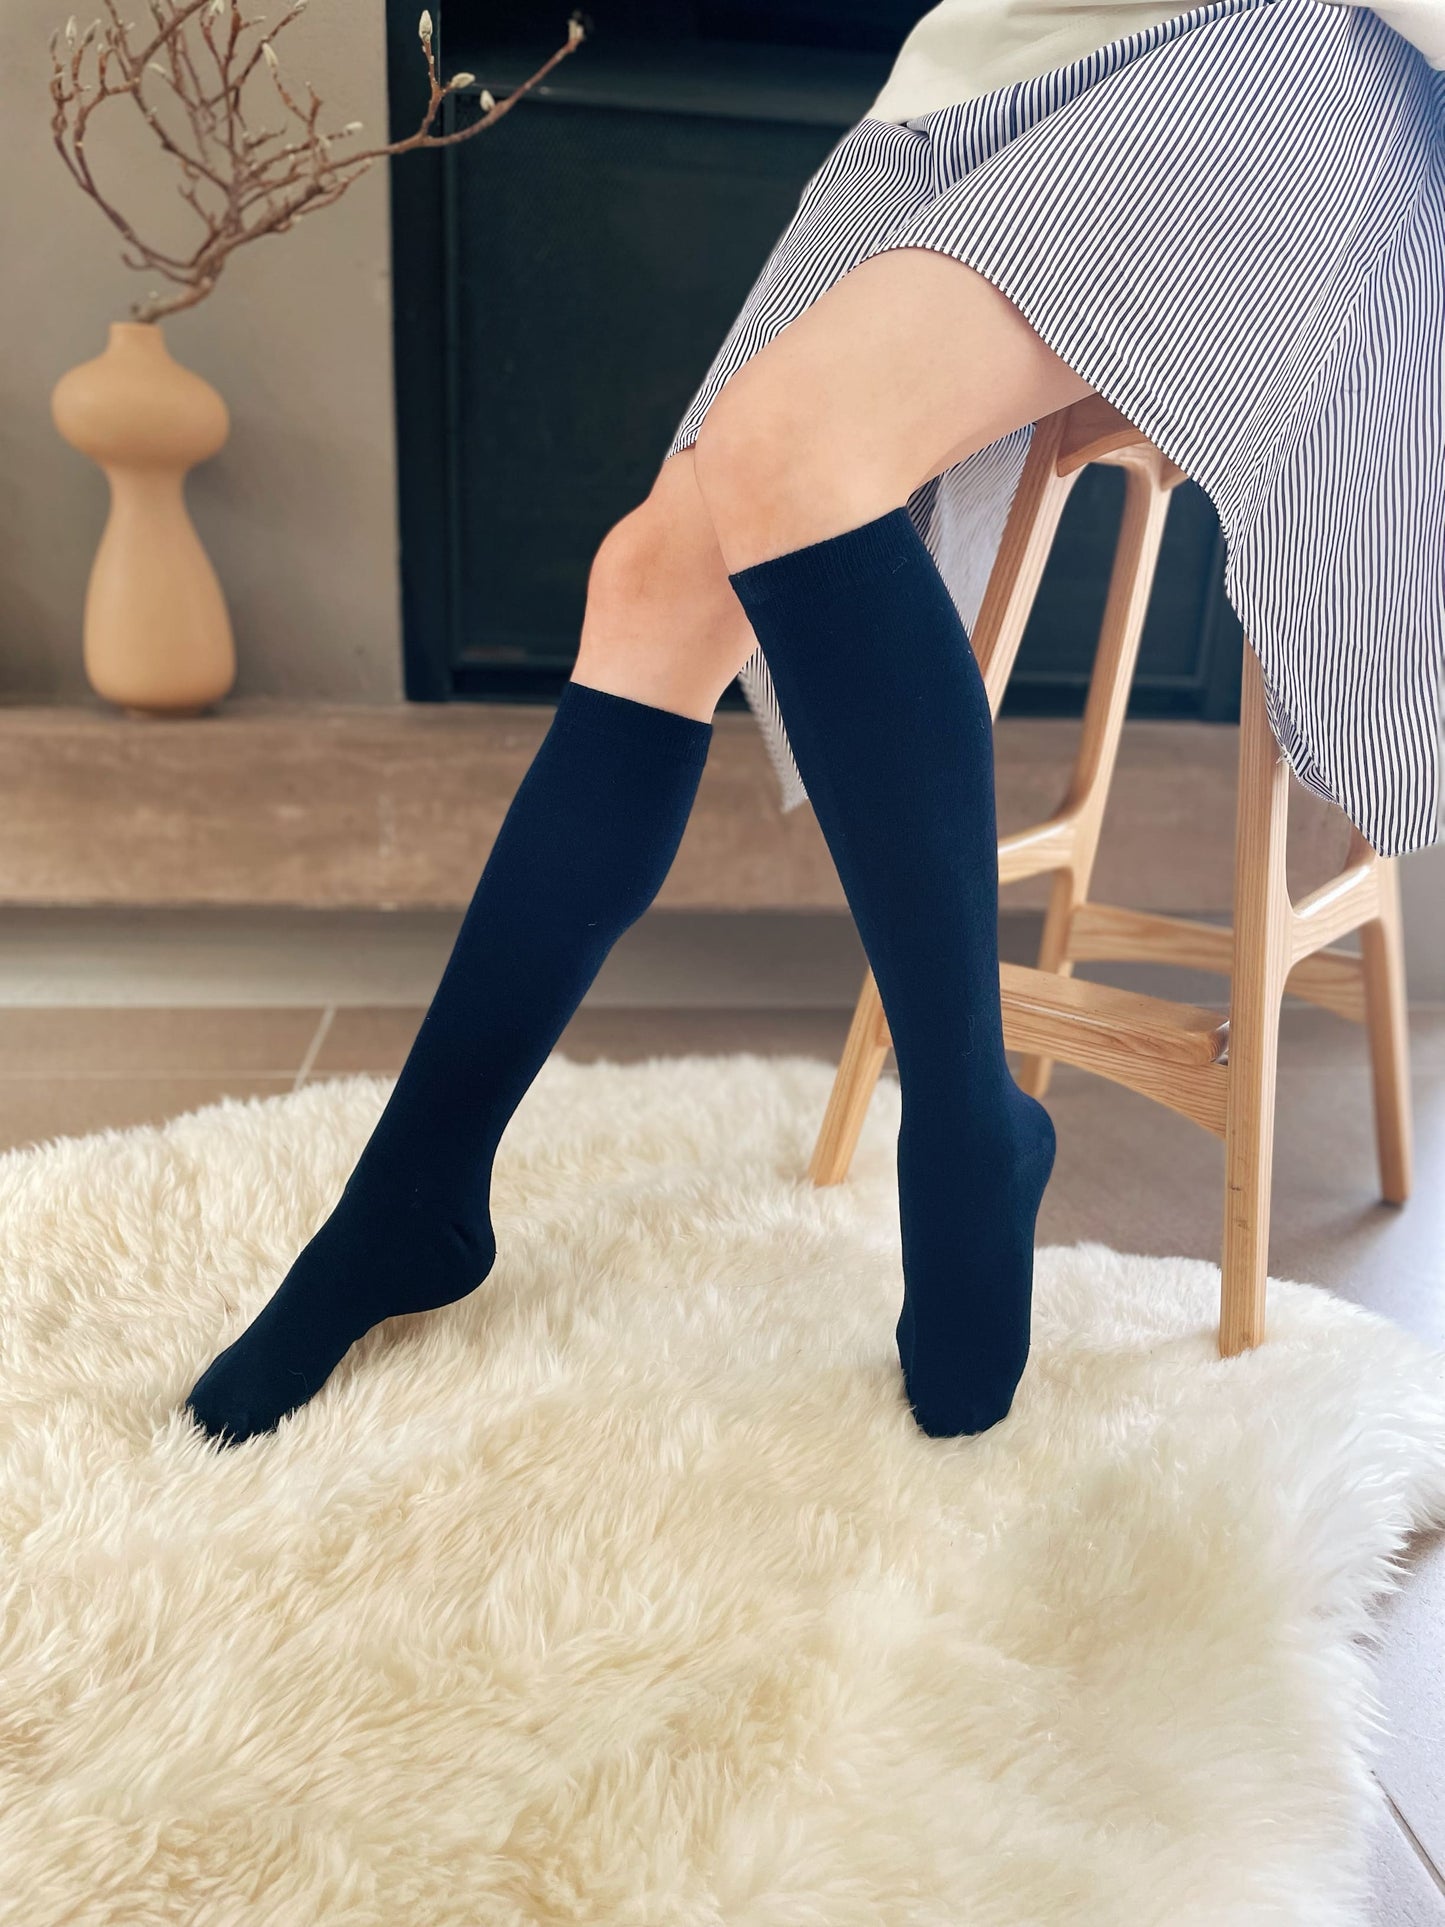 Knee High Cotton Socks - Black